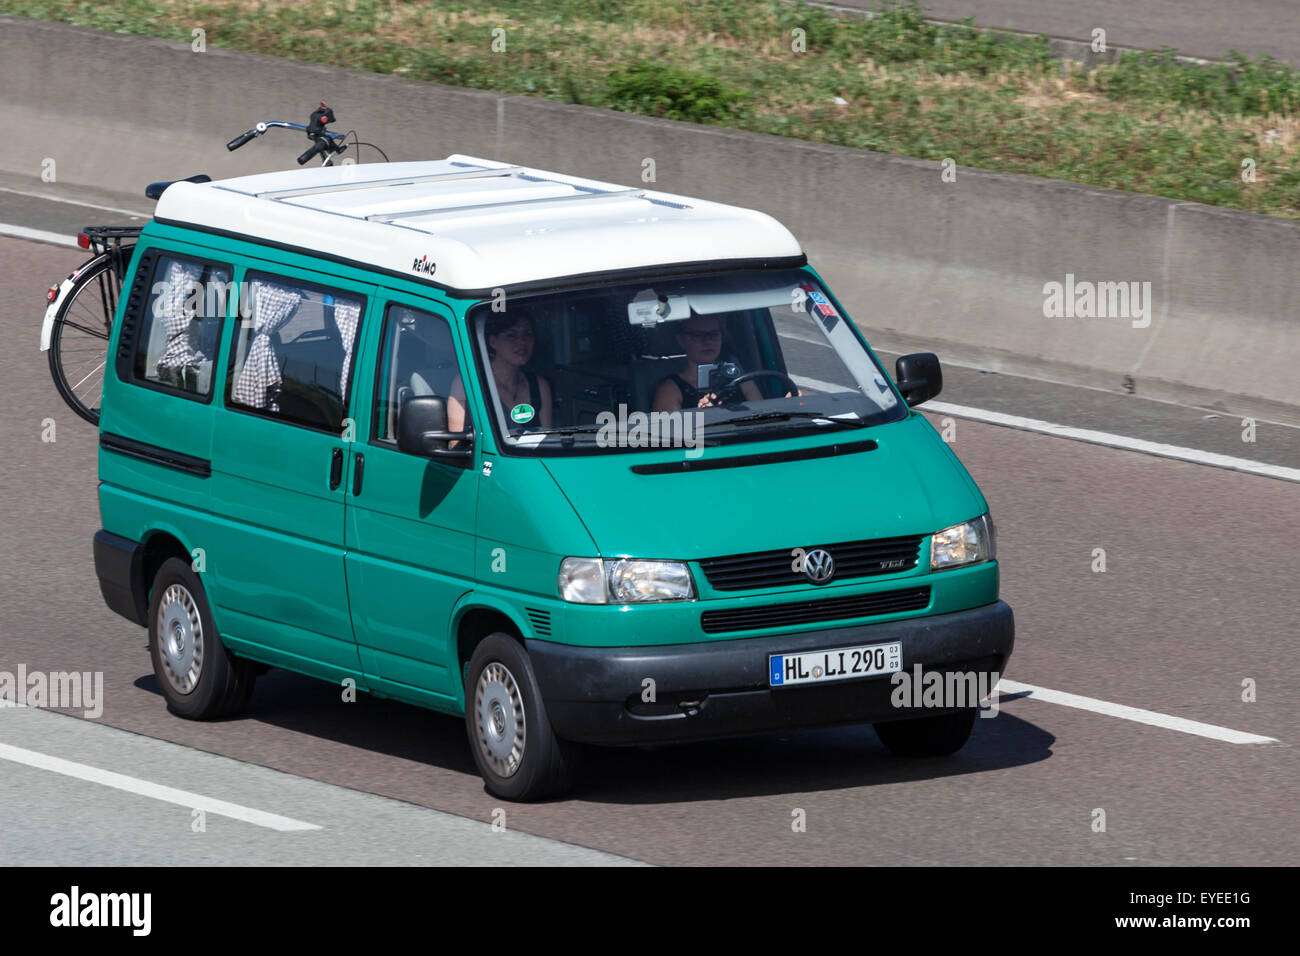 https://c8.alamy.com/comp/EYEE1G/volkswagen-t4-reimo-camping-van-moving-fast-on-the-highway-EYEE1G.jpg